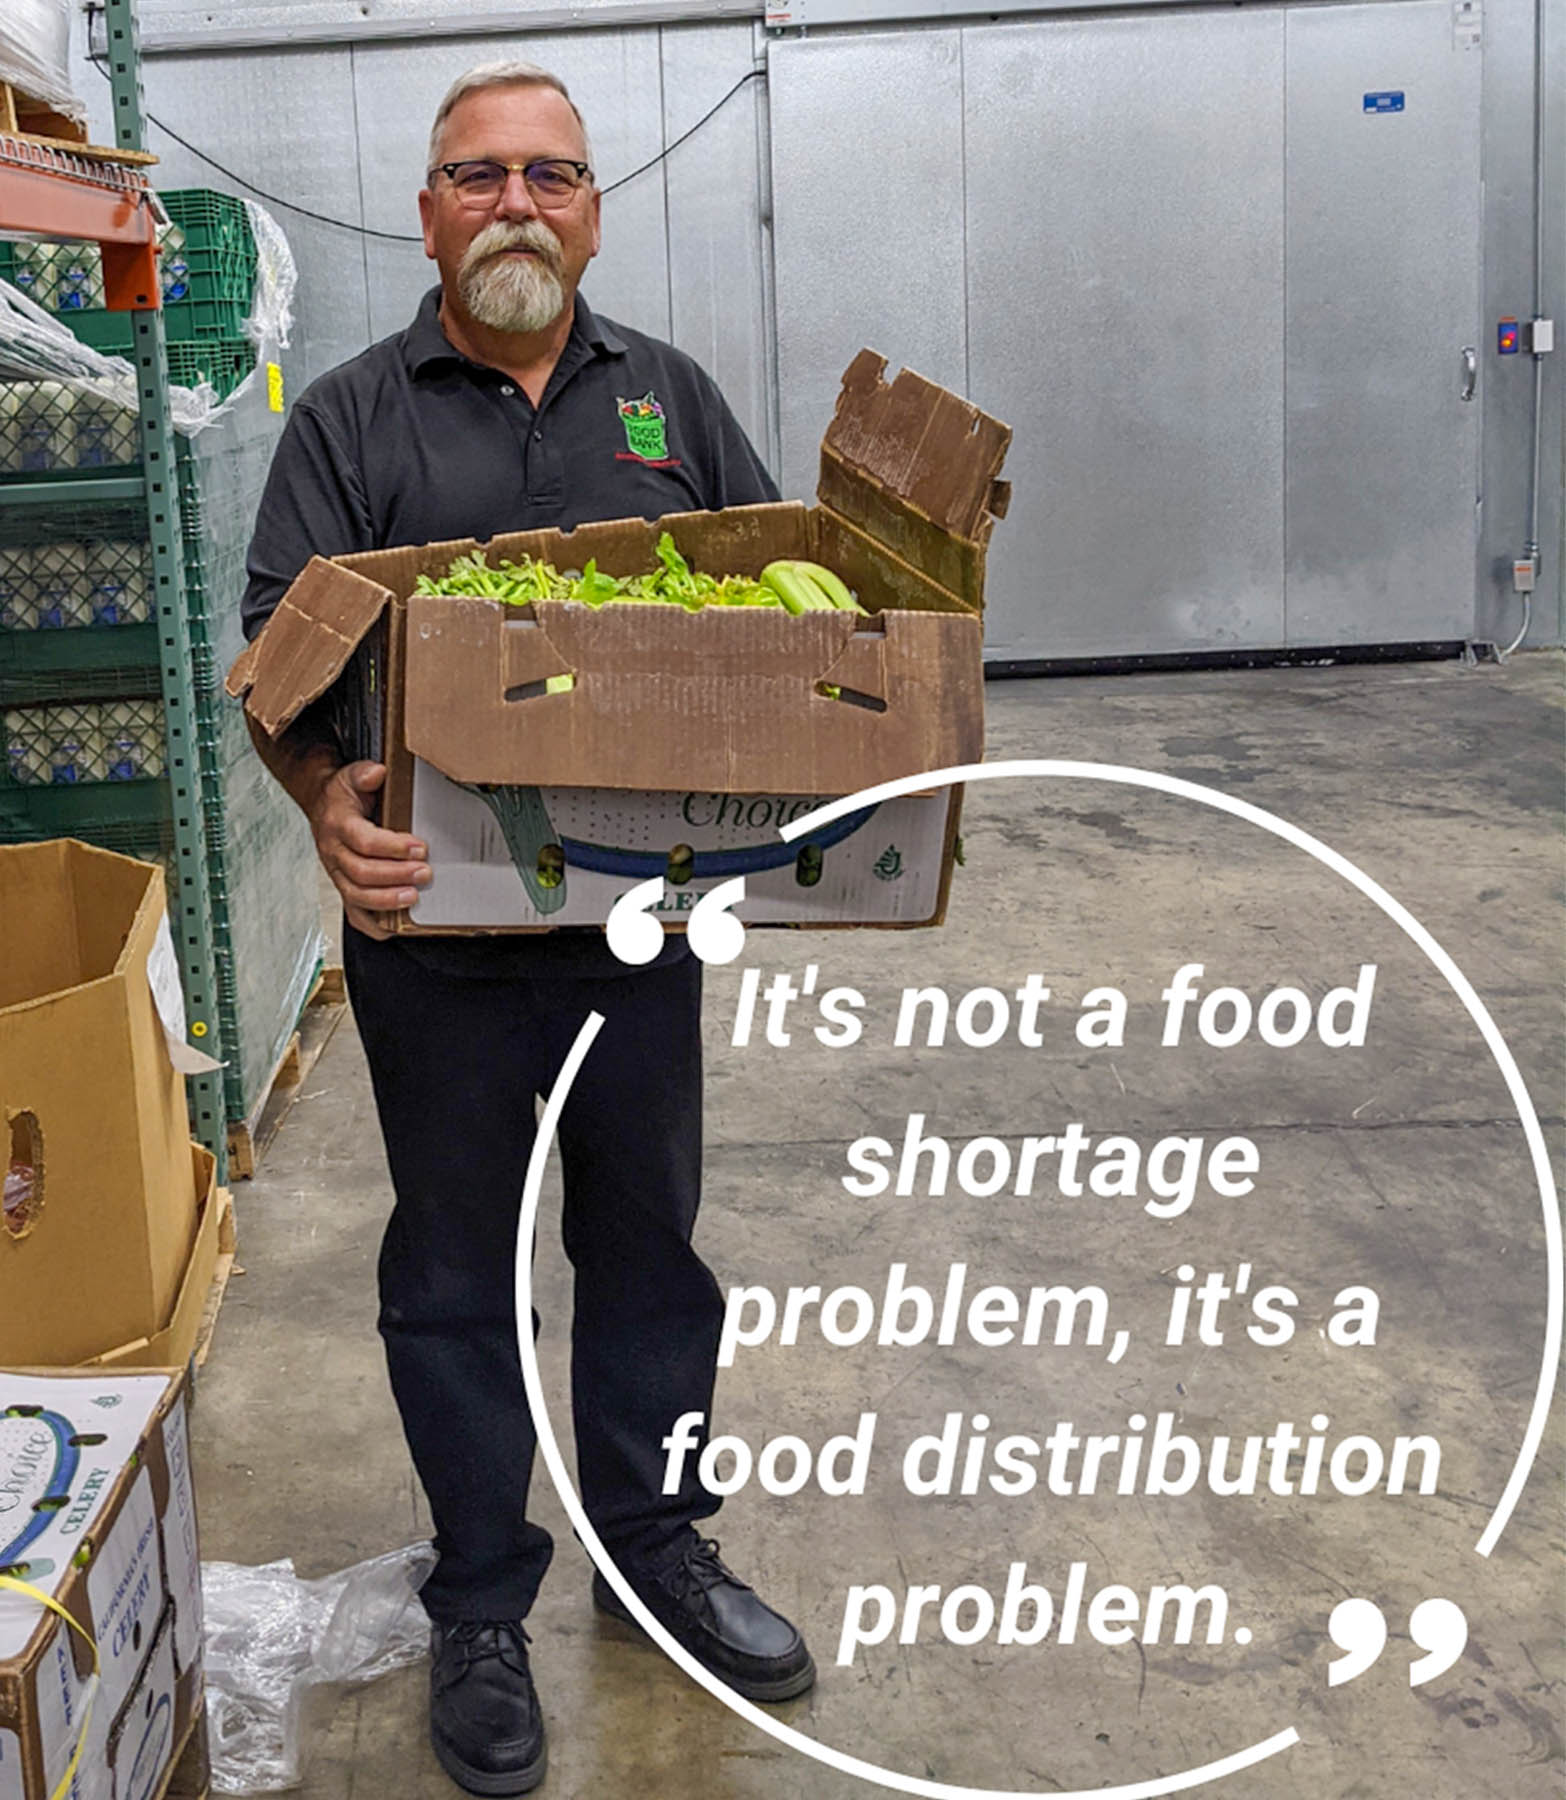 'It's not a food shortage problem it's a food distribution problem.'